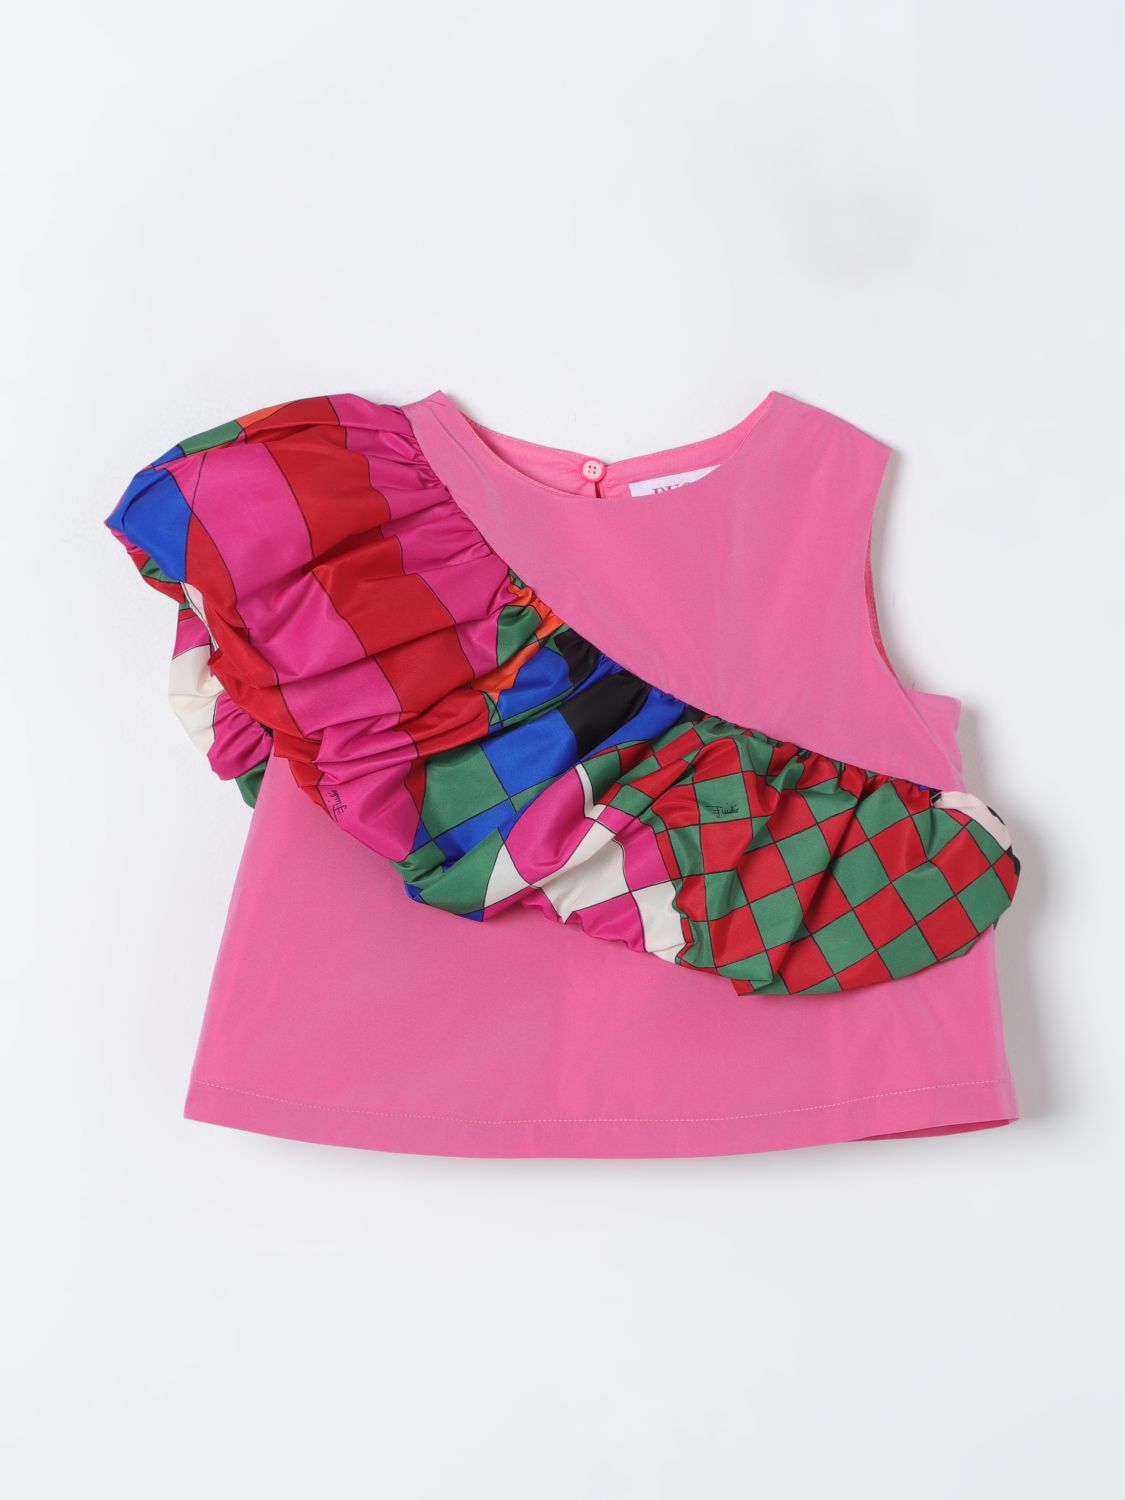 Emilio Pucci Junior T-shirt  Kids Colour Fuchsia